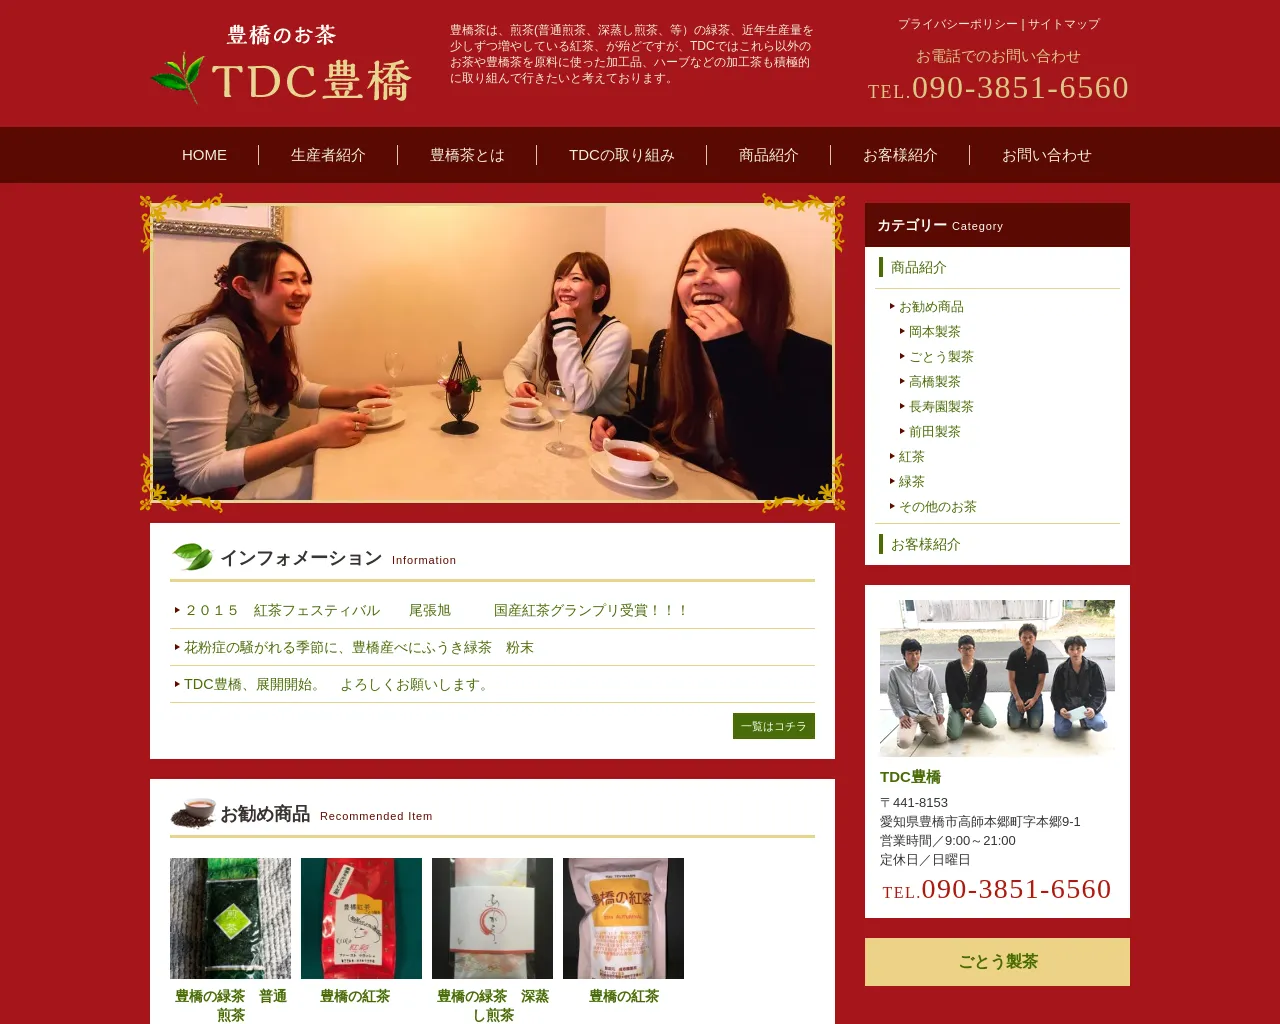 TDC豊橋 (問合せ担当 長寿園製茶) site